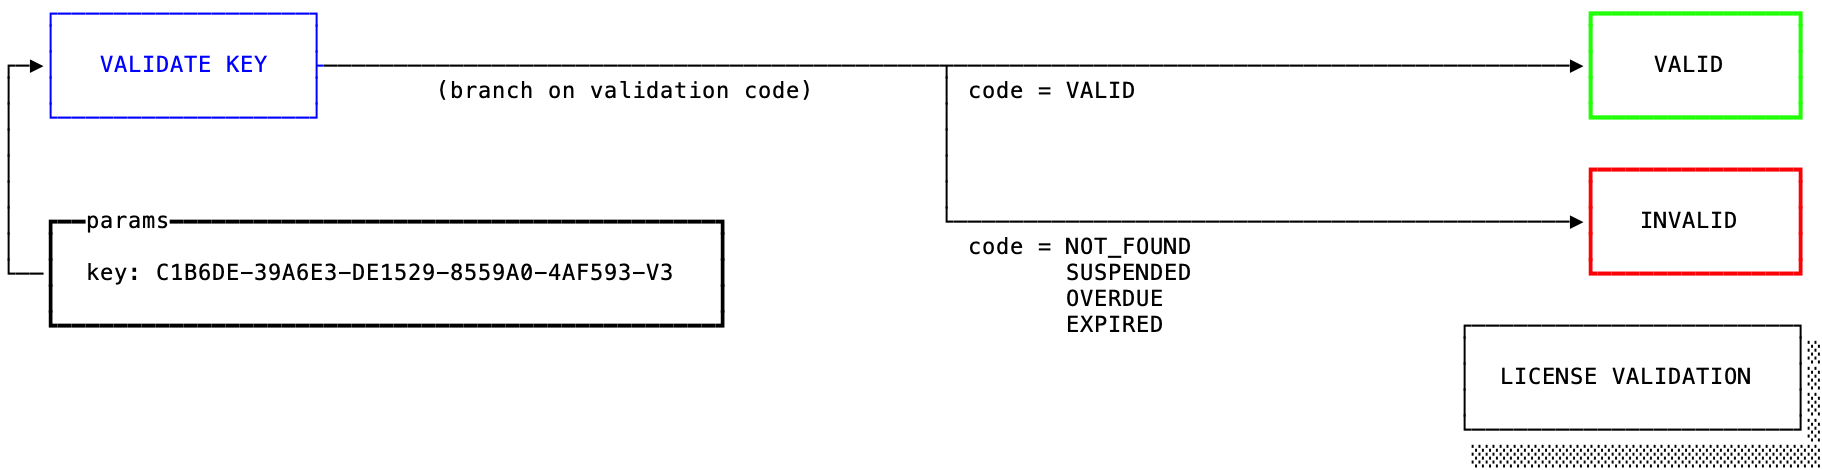 Diagram of validating a license key